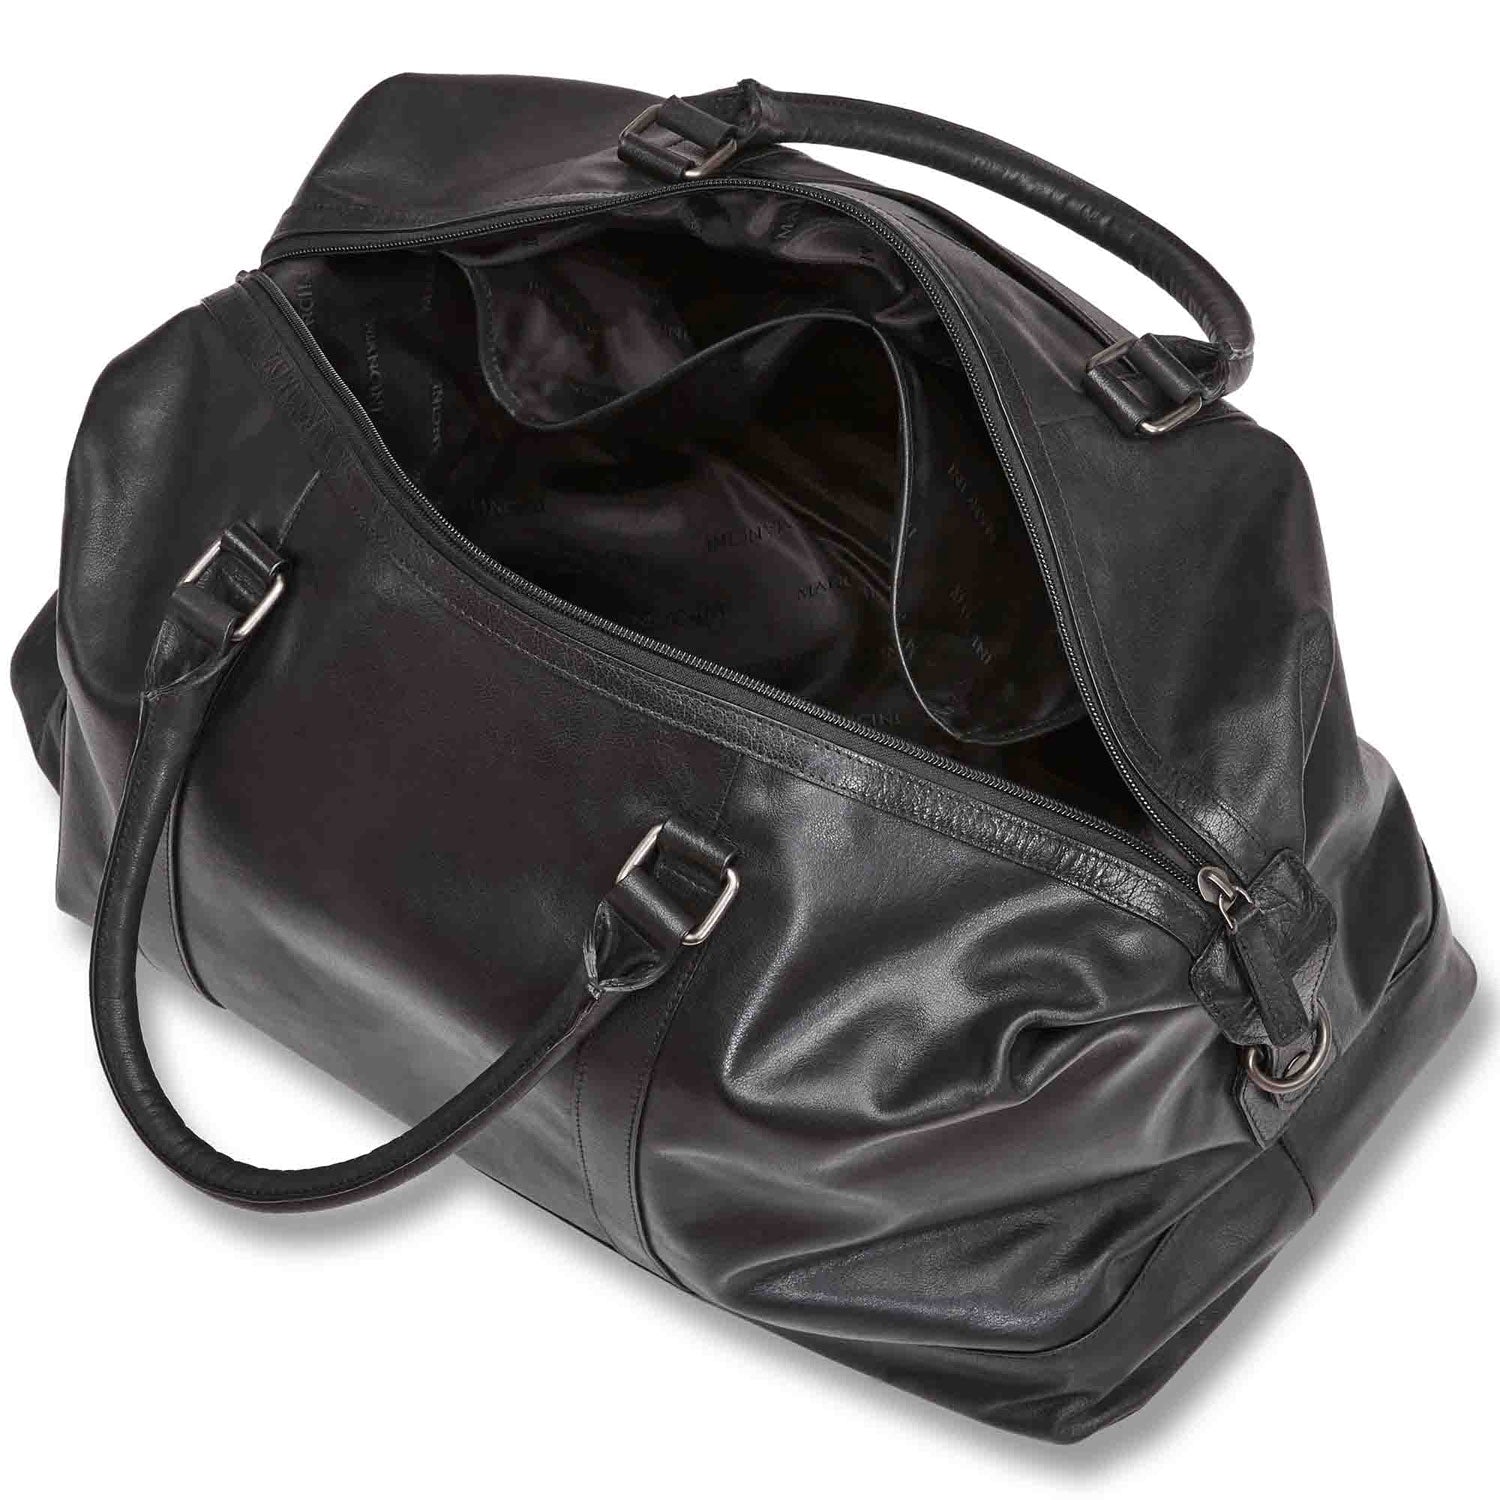 Mancini Leather Carry-on Duffle Bag, 20" x 10" x 12", Black